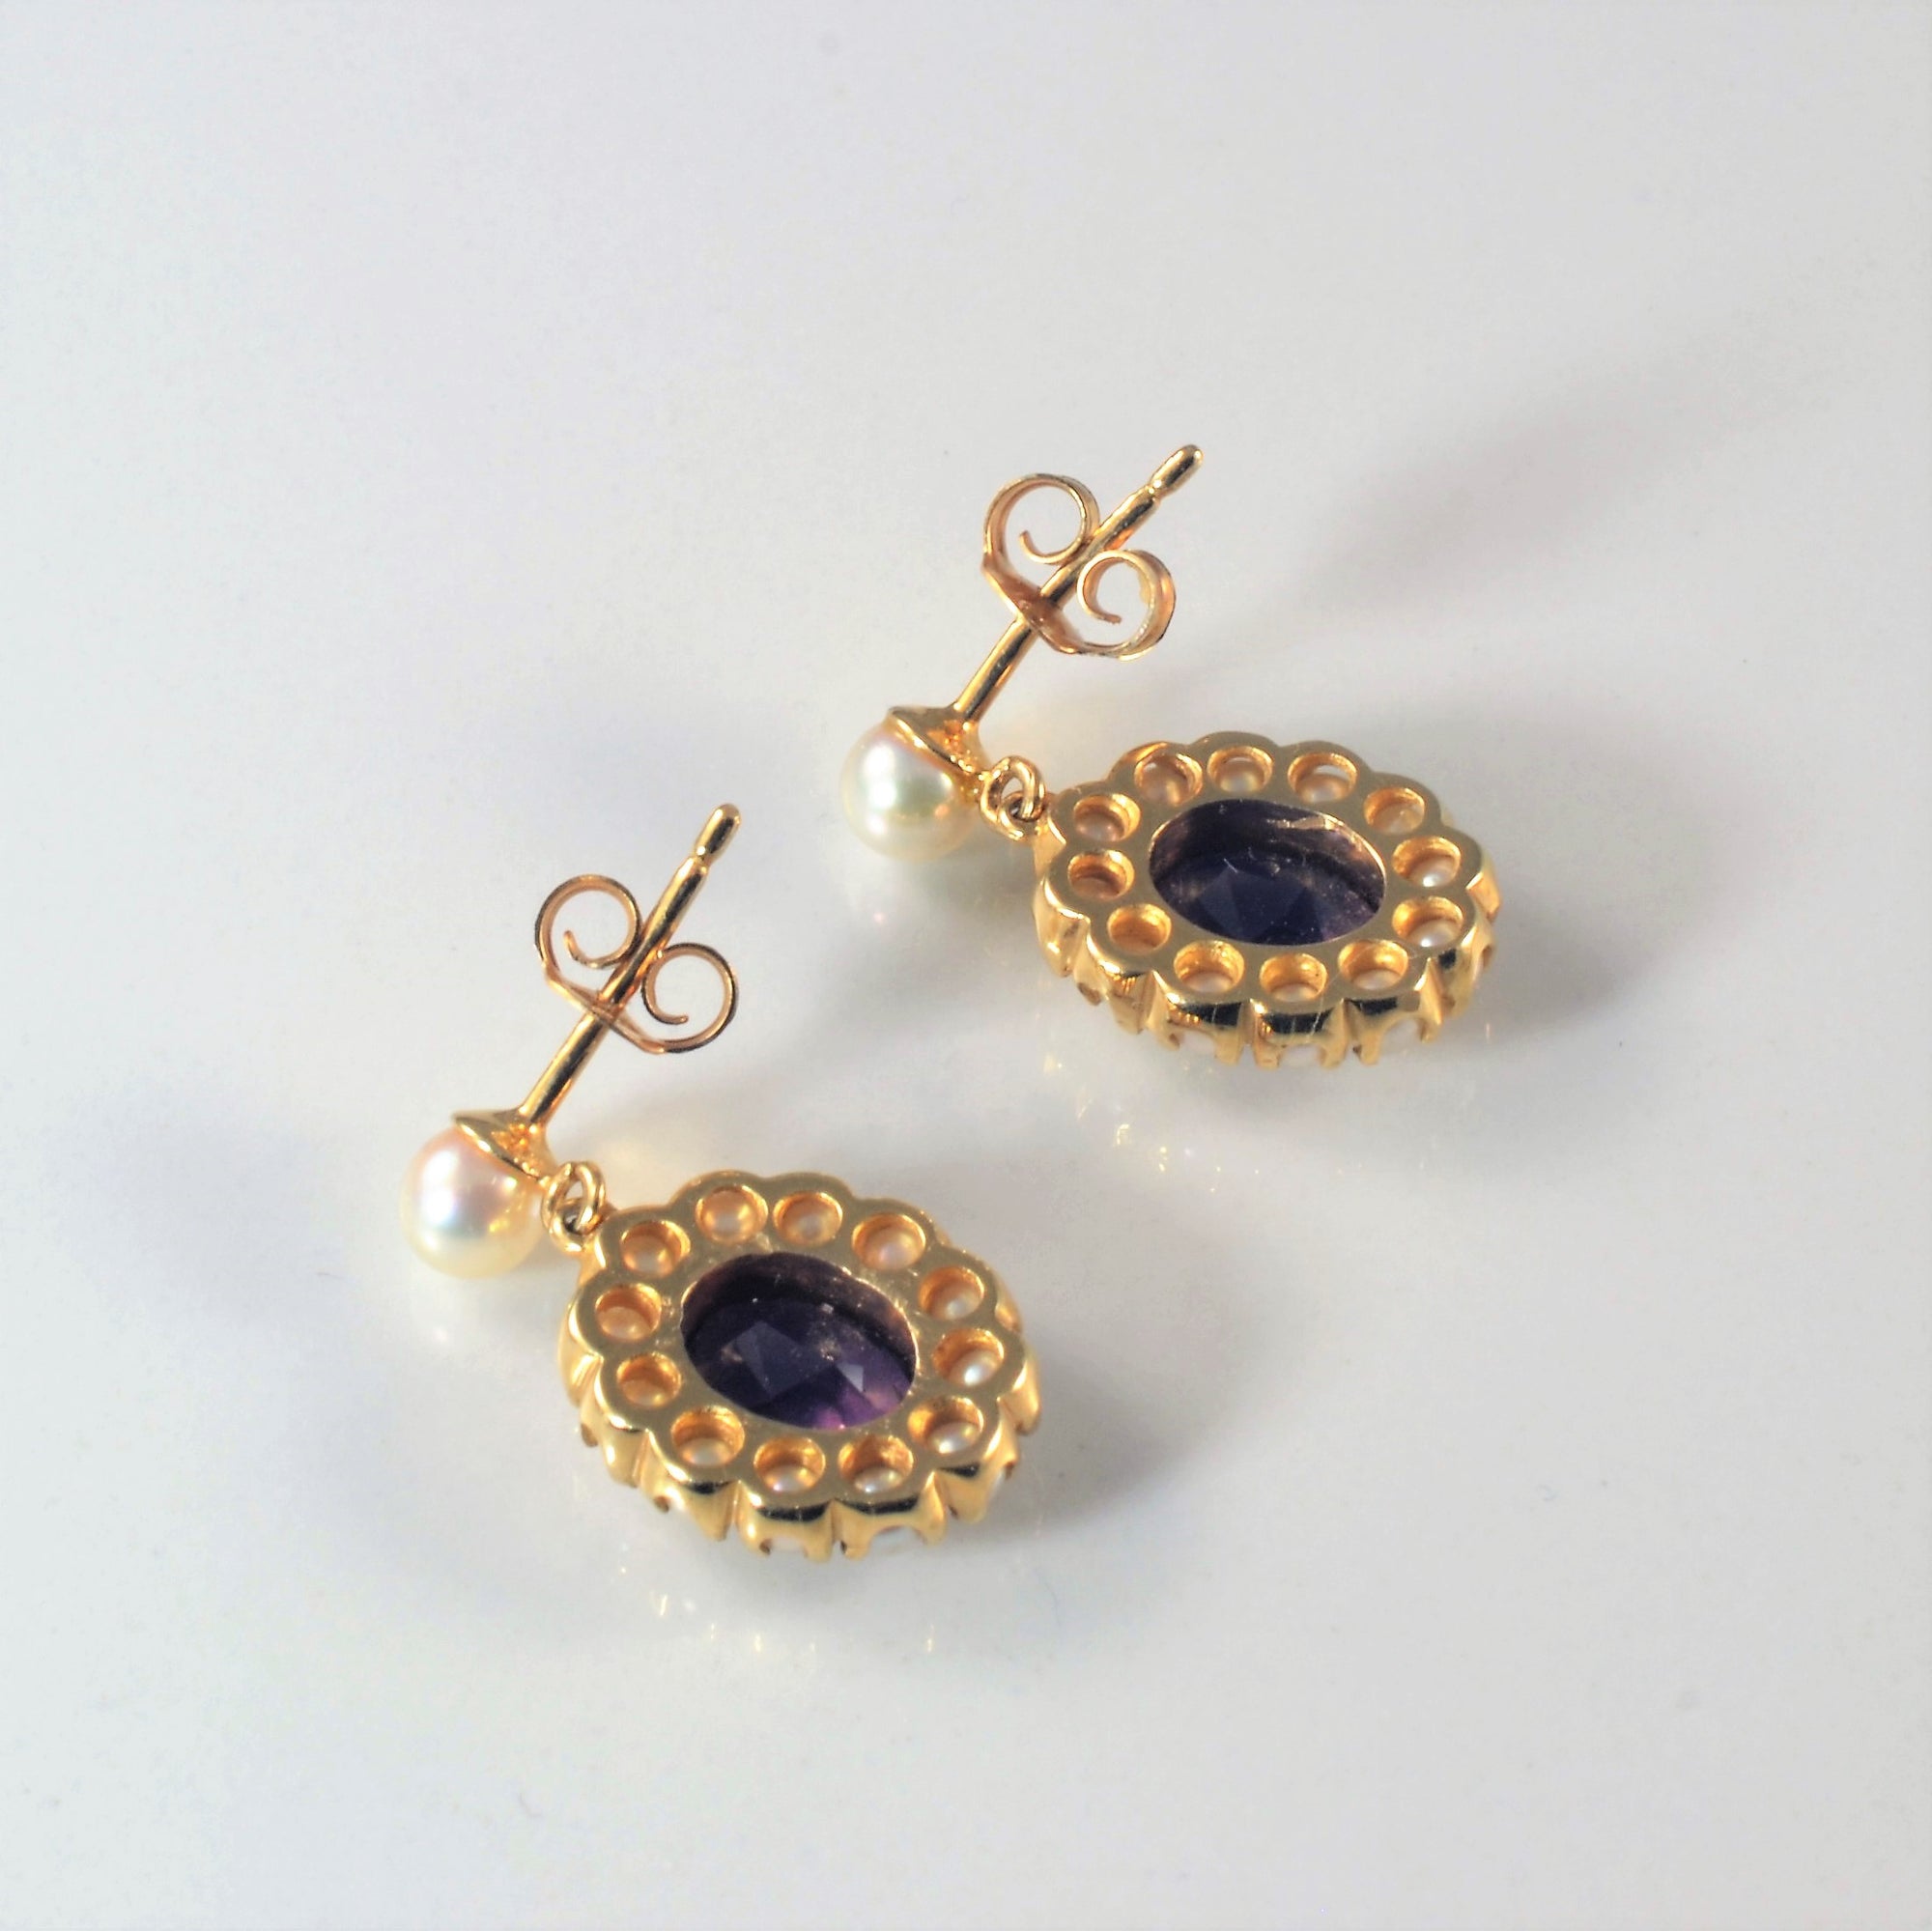 Amethyst & Pearls Earrings | 2.00ctw |